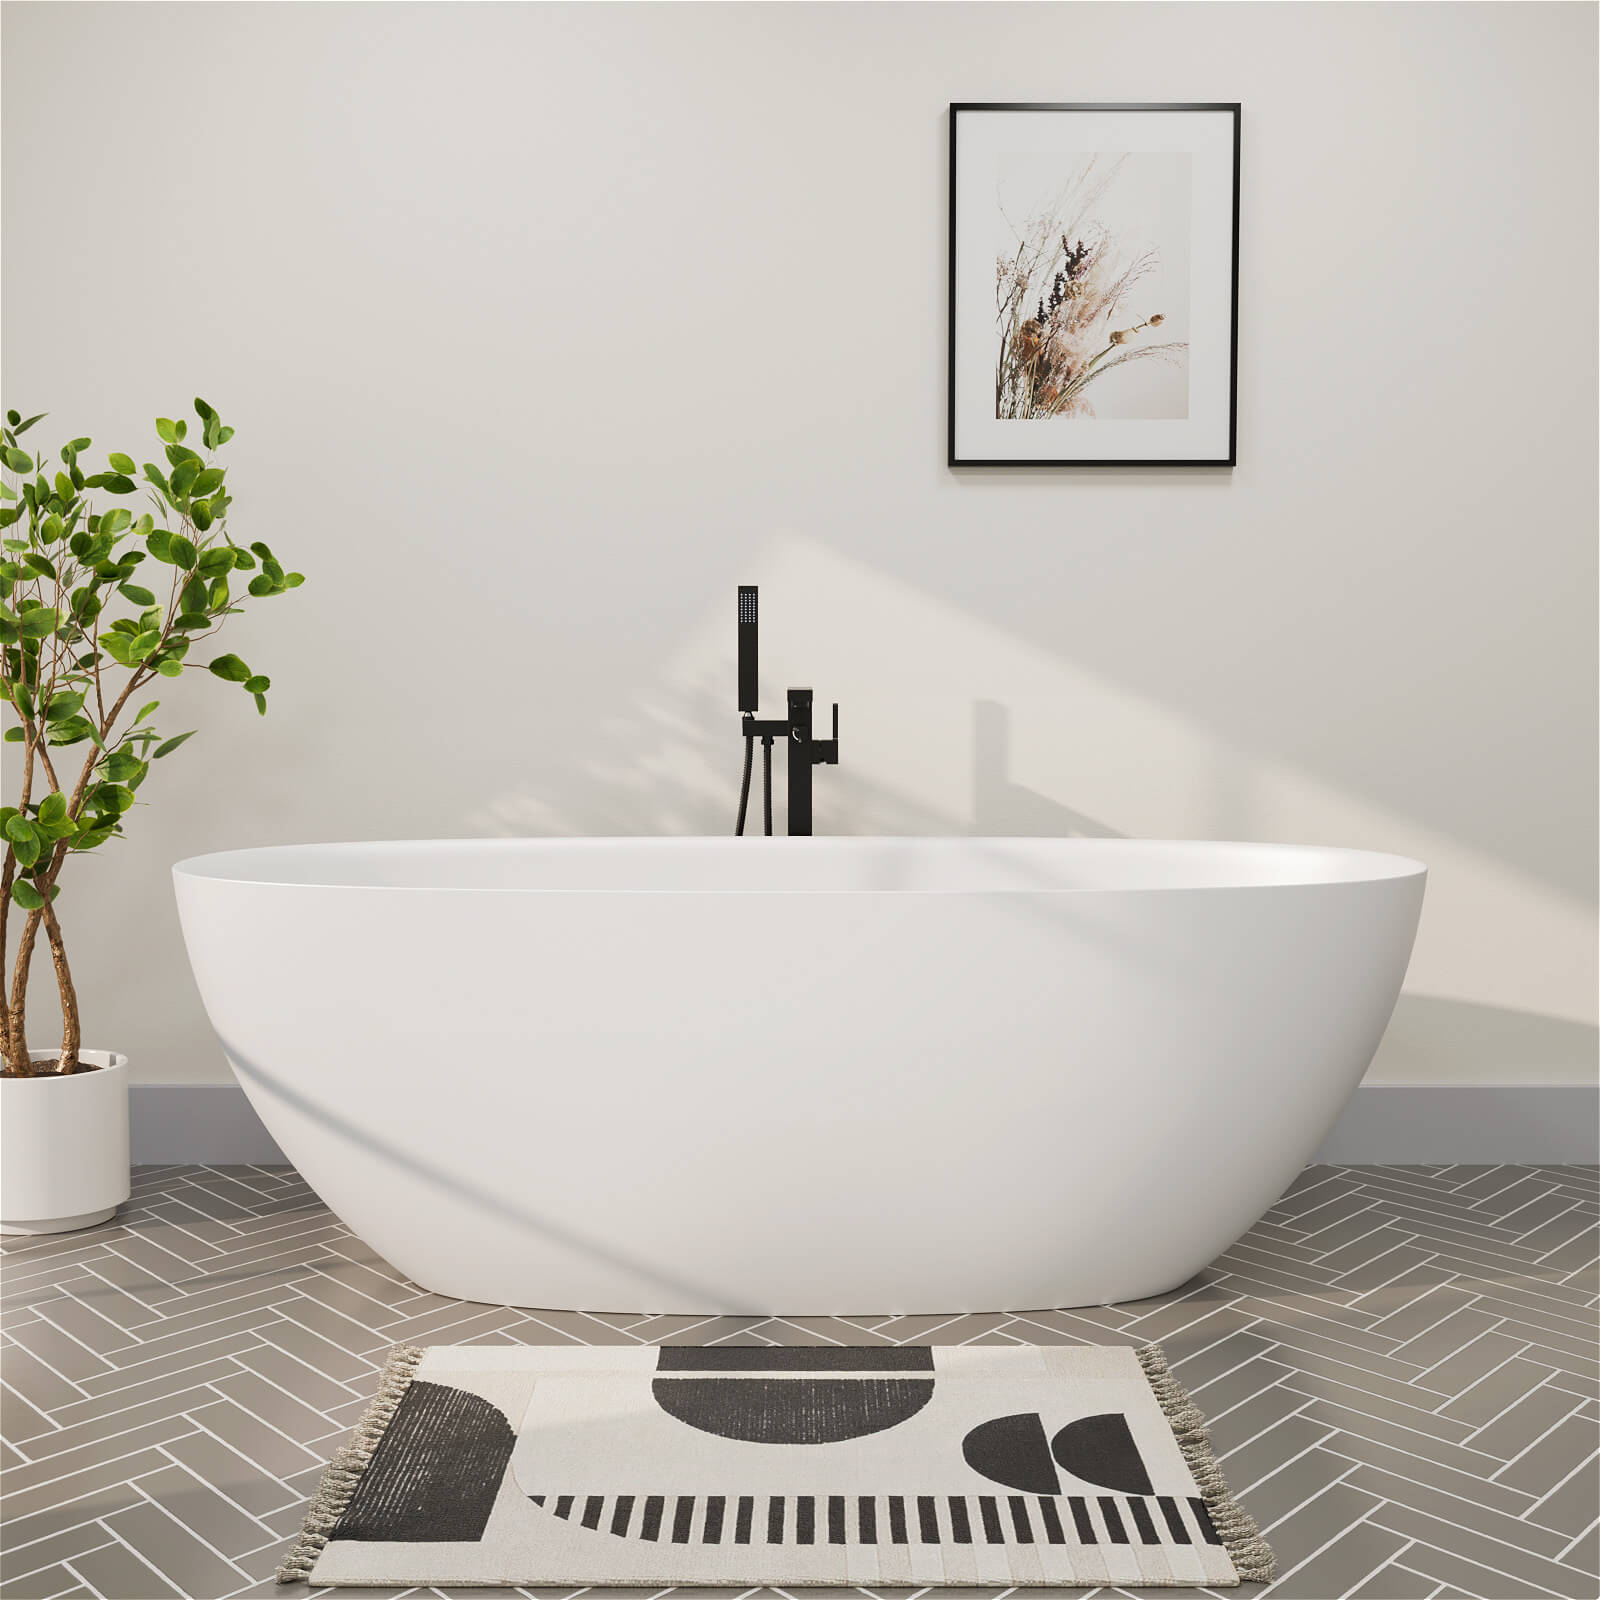 65 inch White Stone Resin Modern Oval Shaped Freestanding Soaking Bathtub